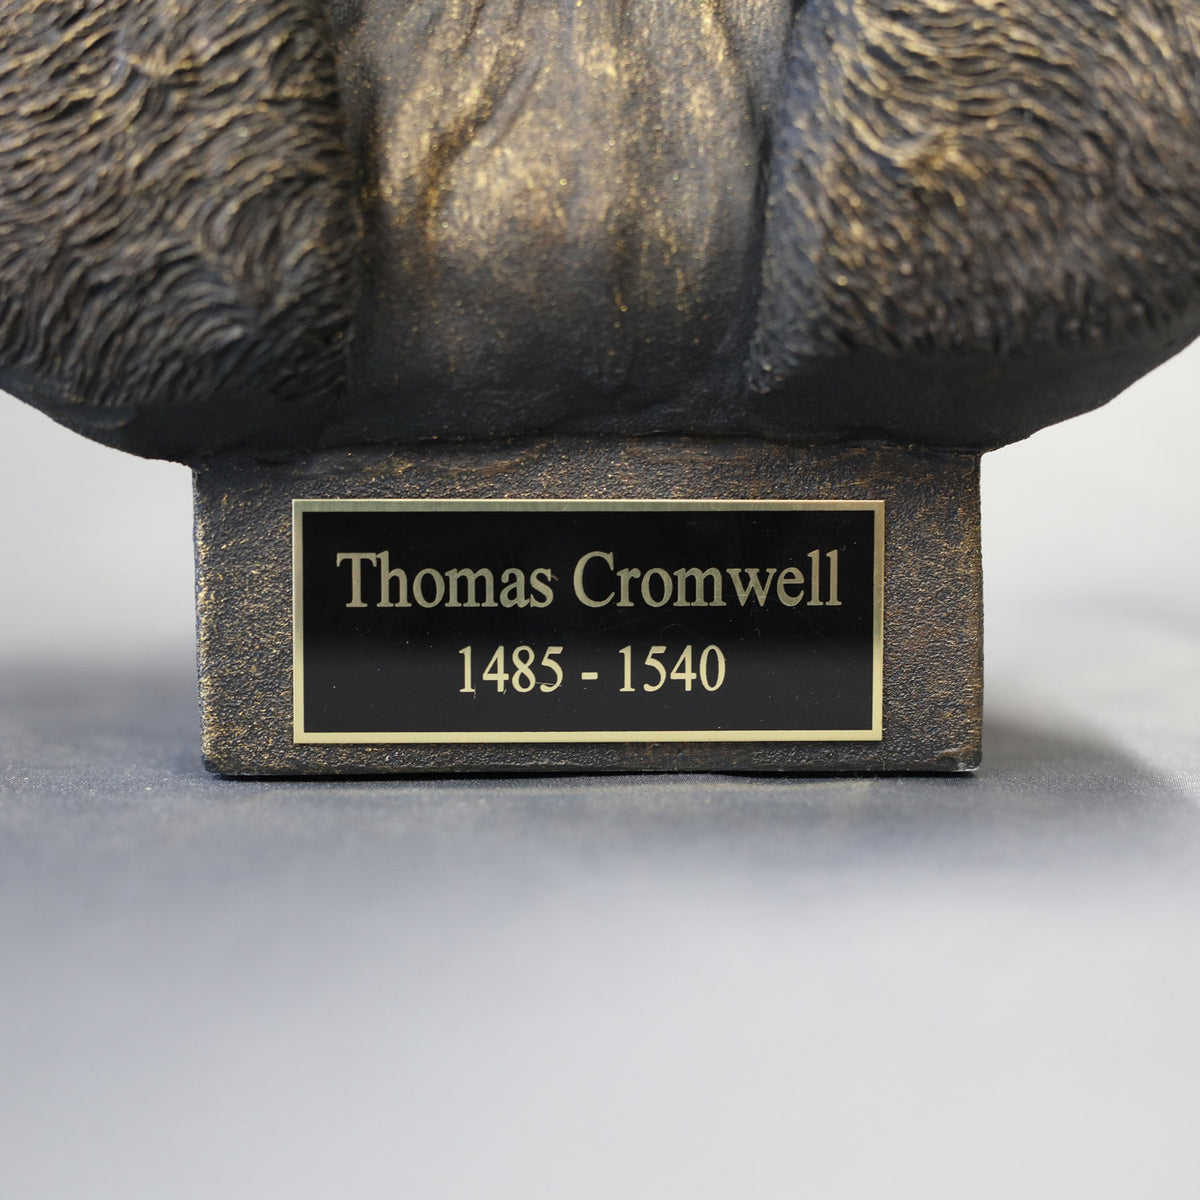 Thomas Cromwell - Sculpture